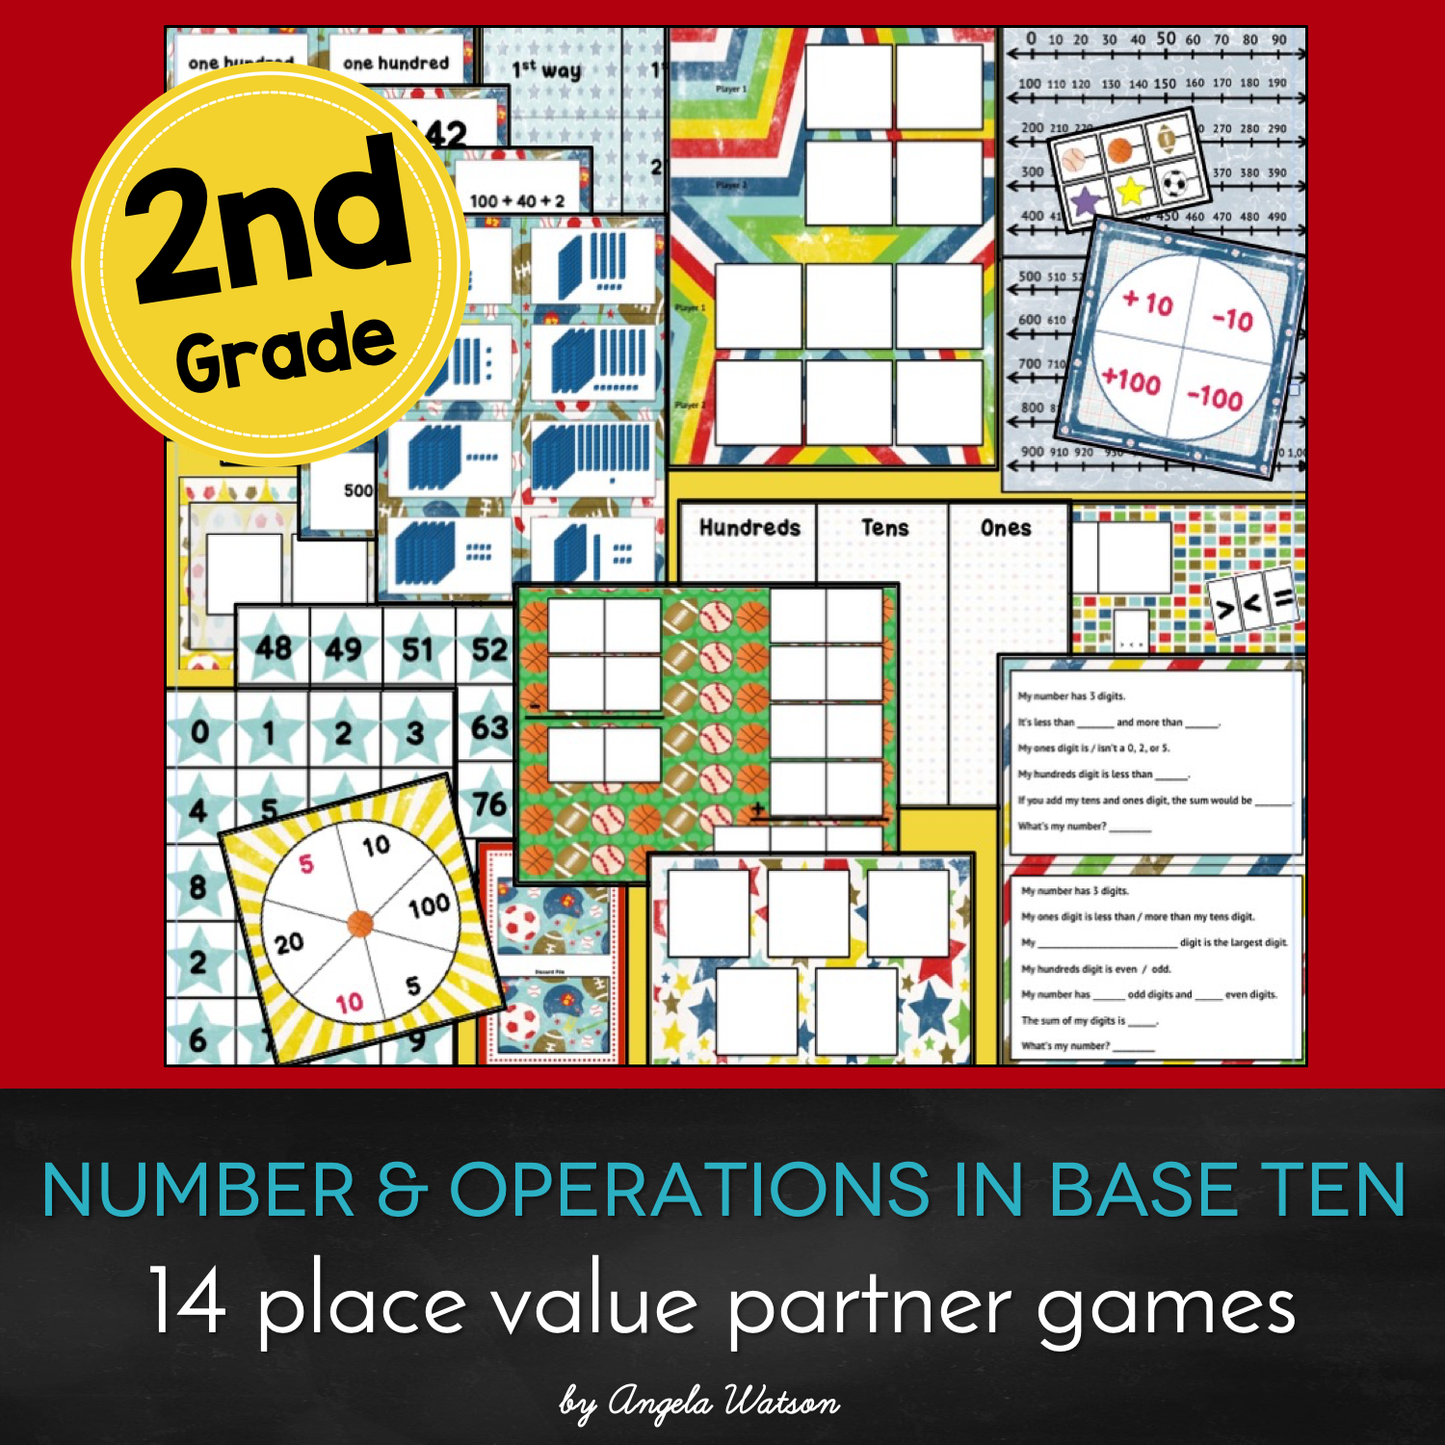 2nd Grade Place Value: 14 math games